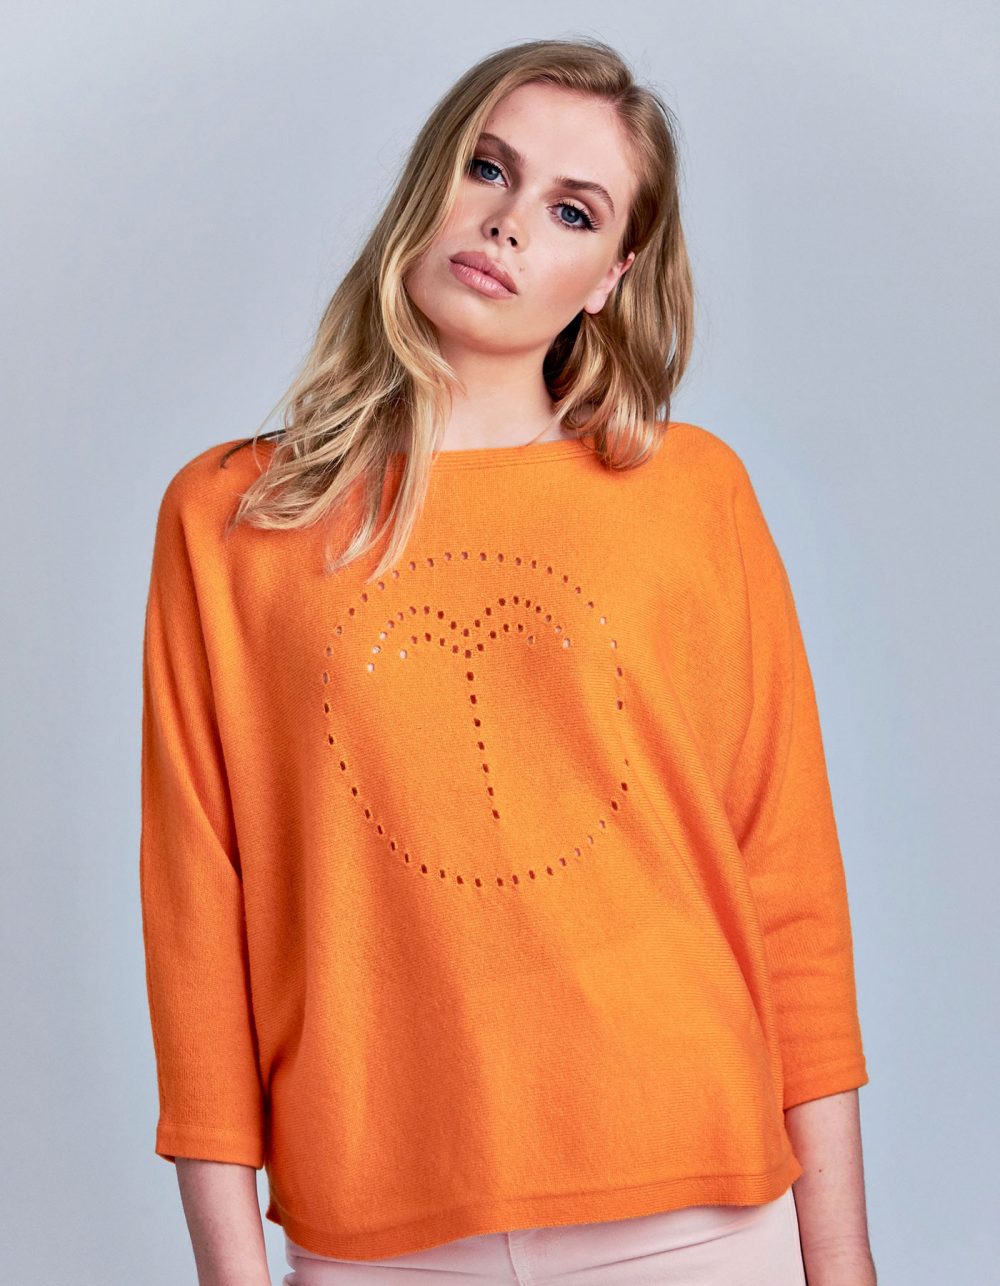 A model wearing the palm jumper in orange, part of the malin darlin range of designer cashmere jumpers.